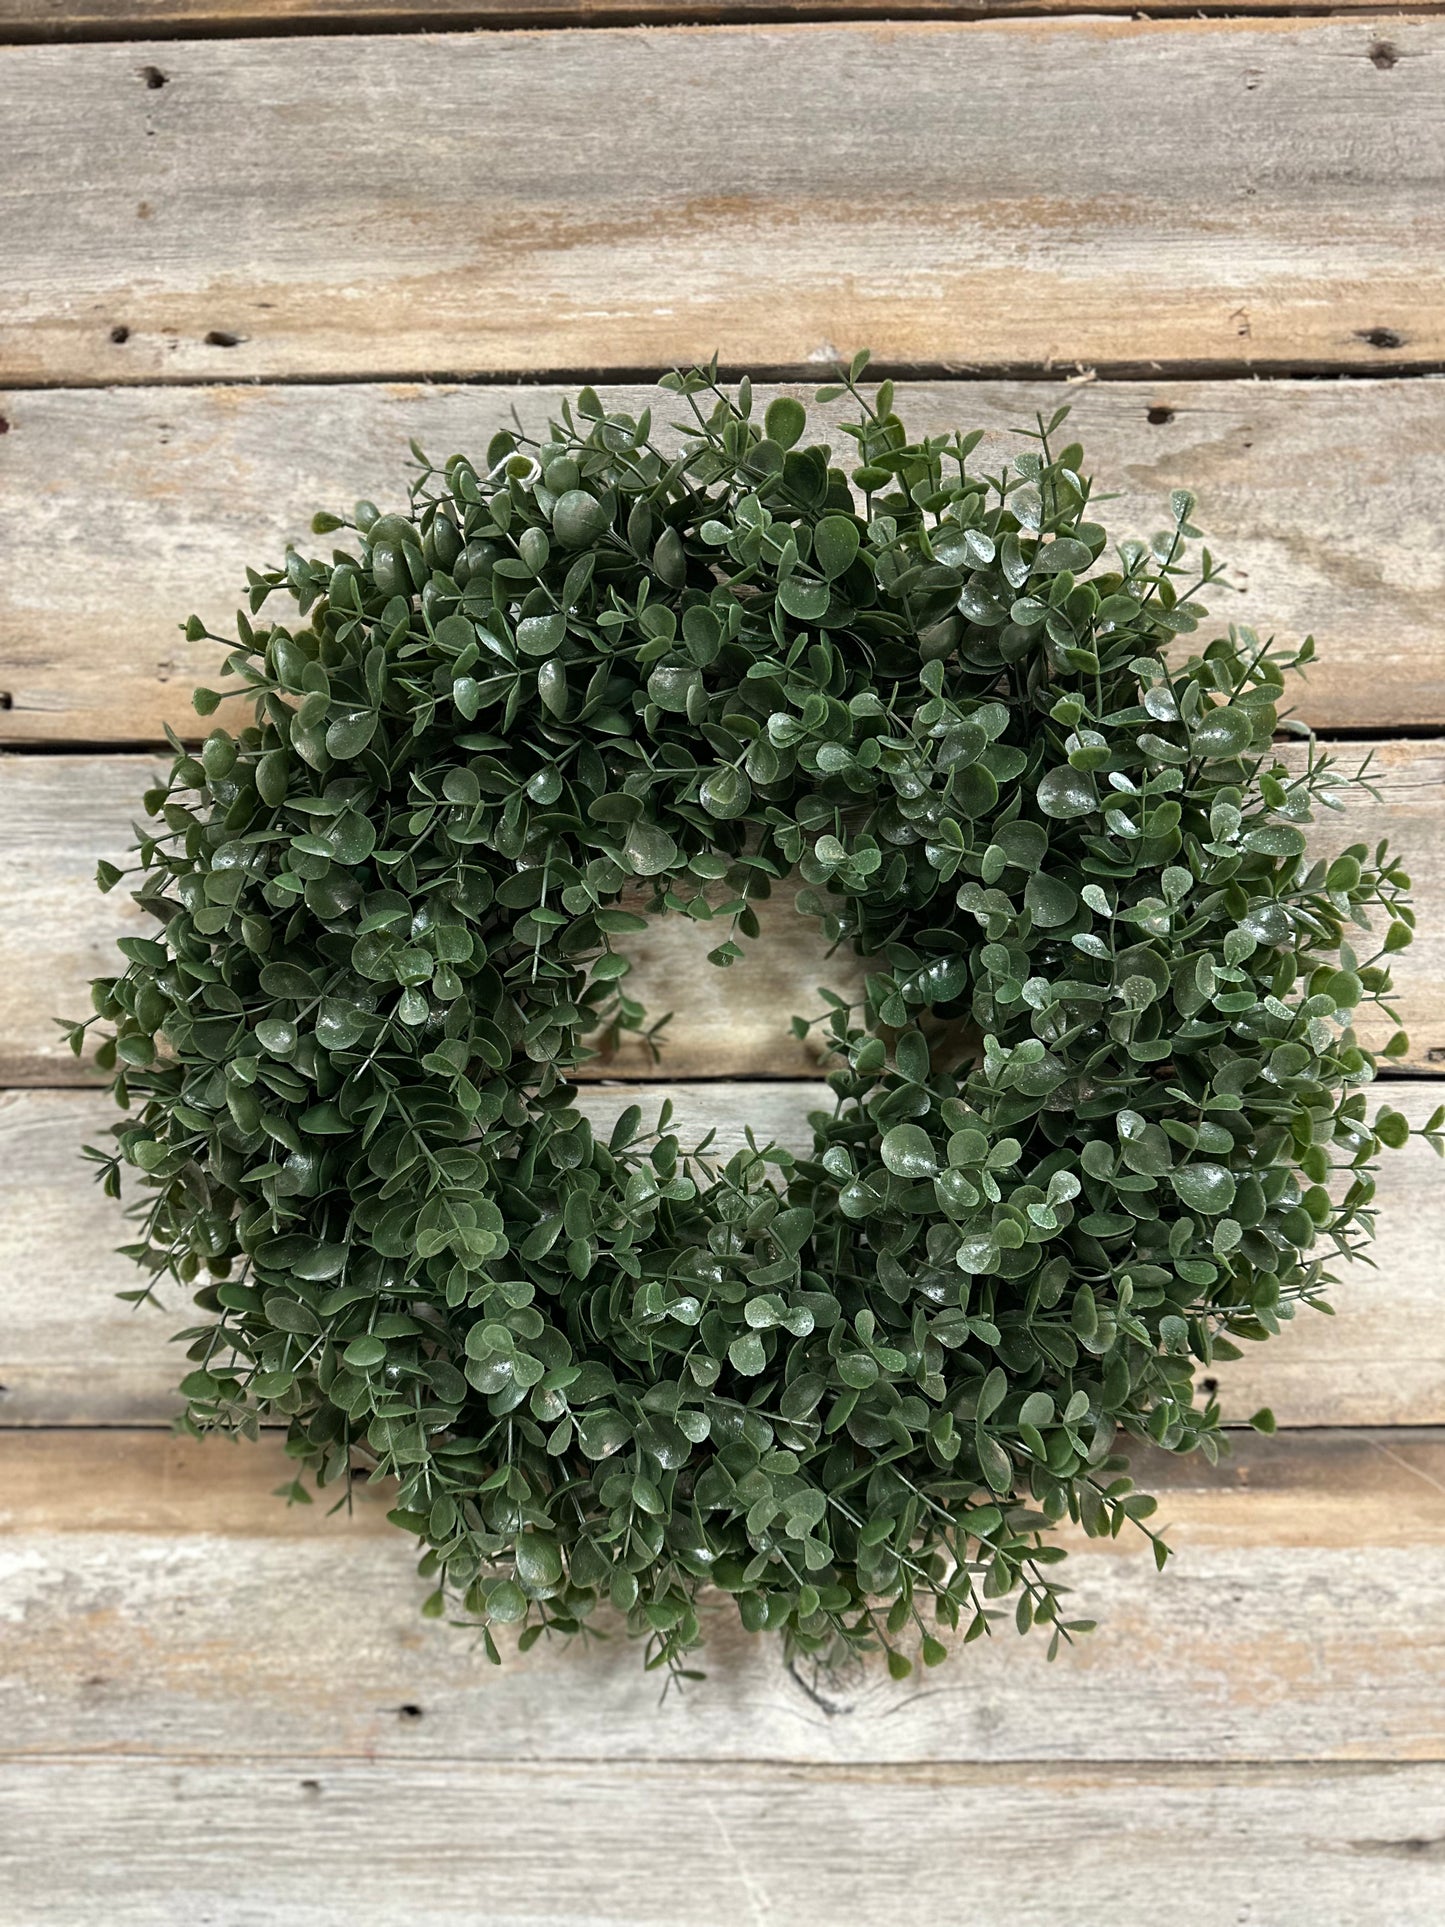 Boxwood wreath